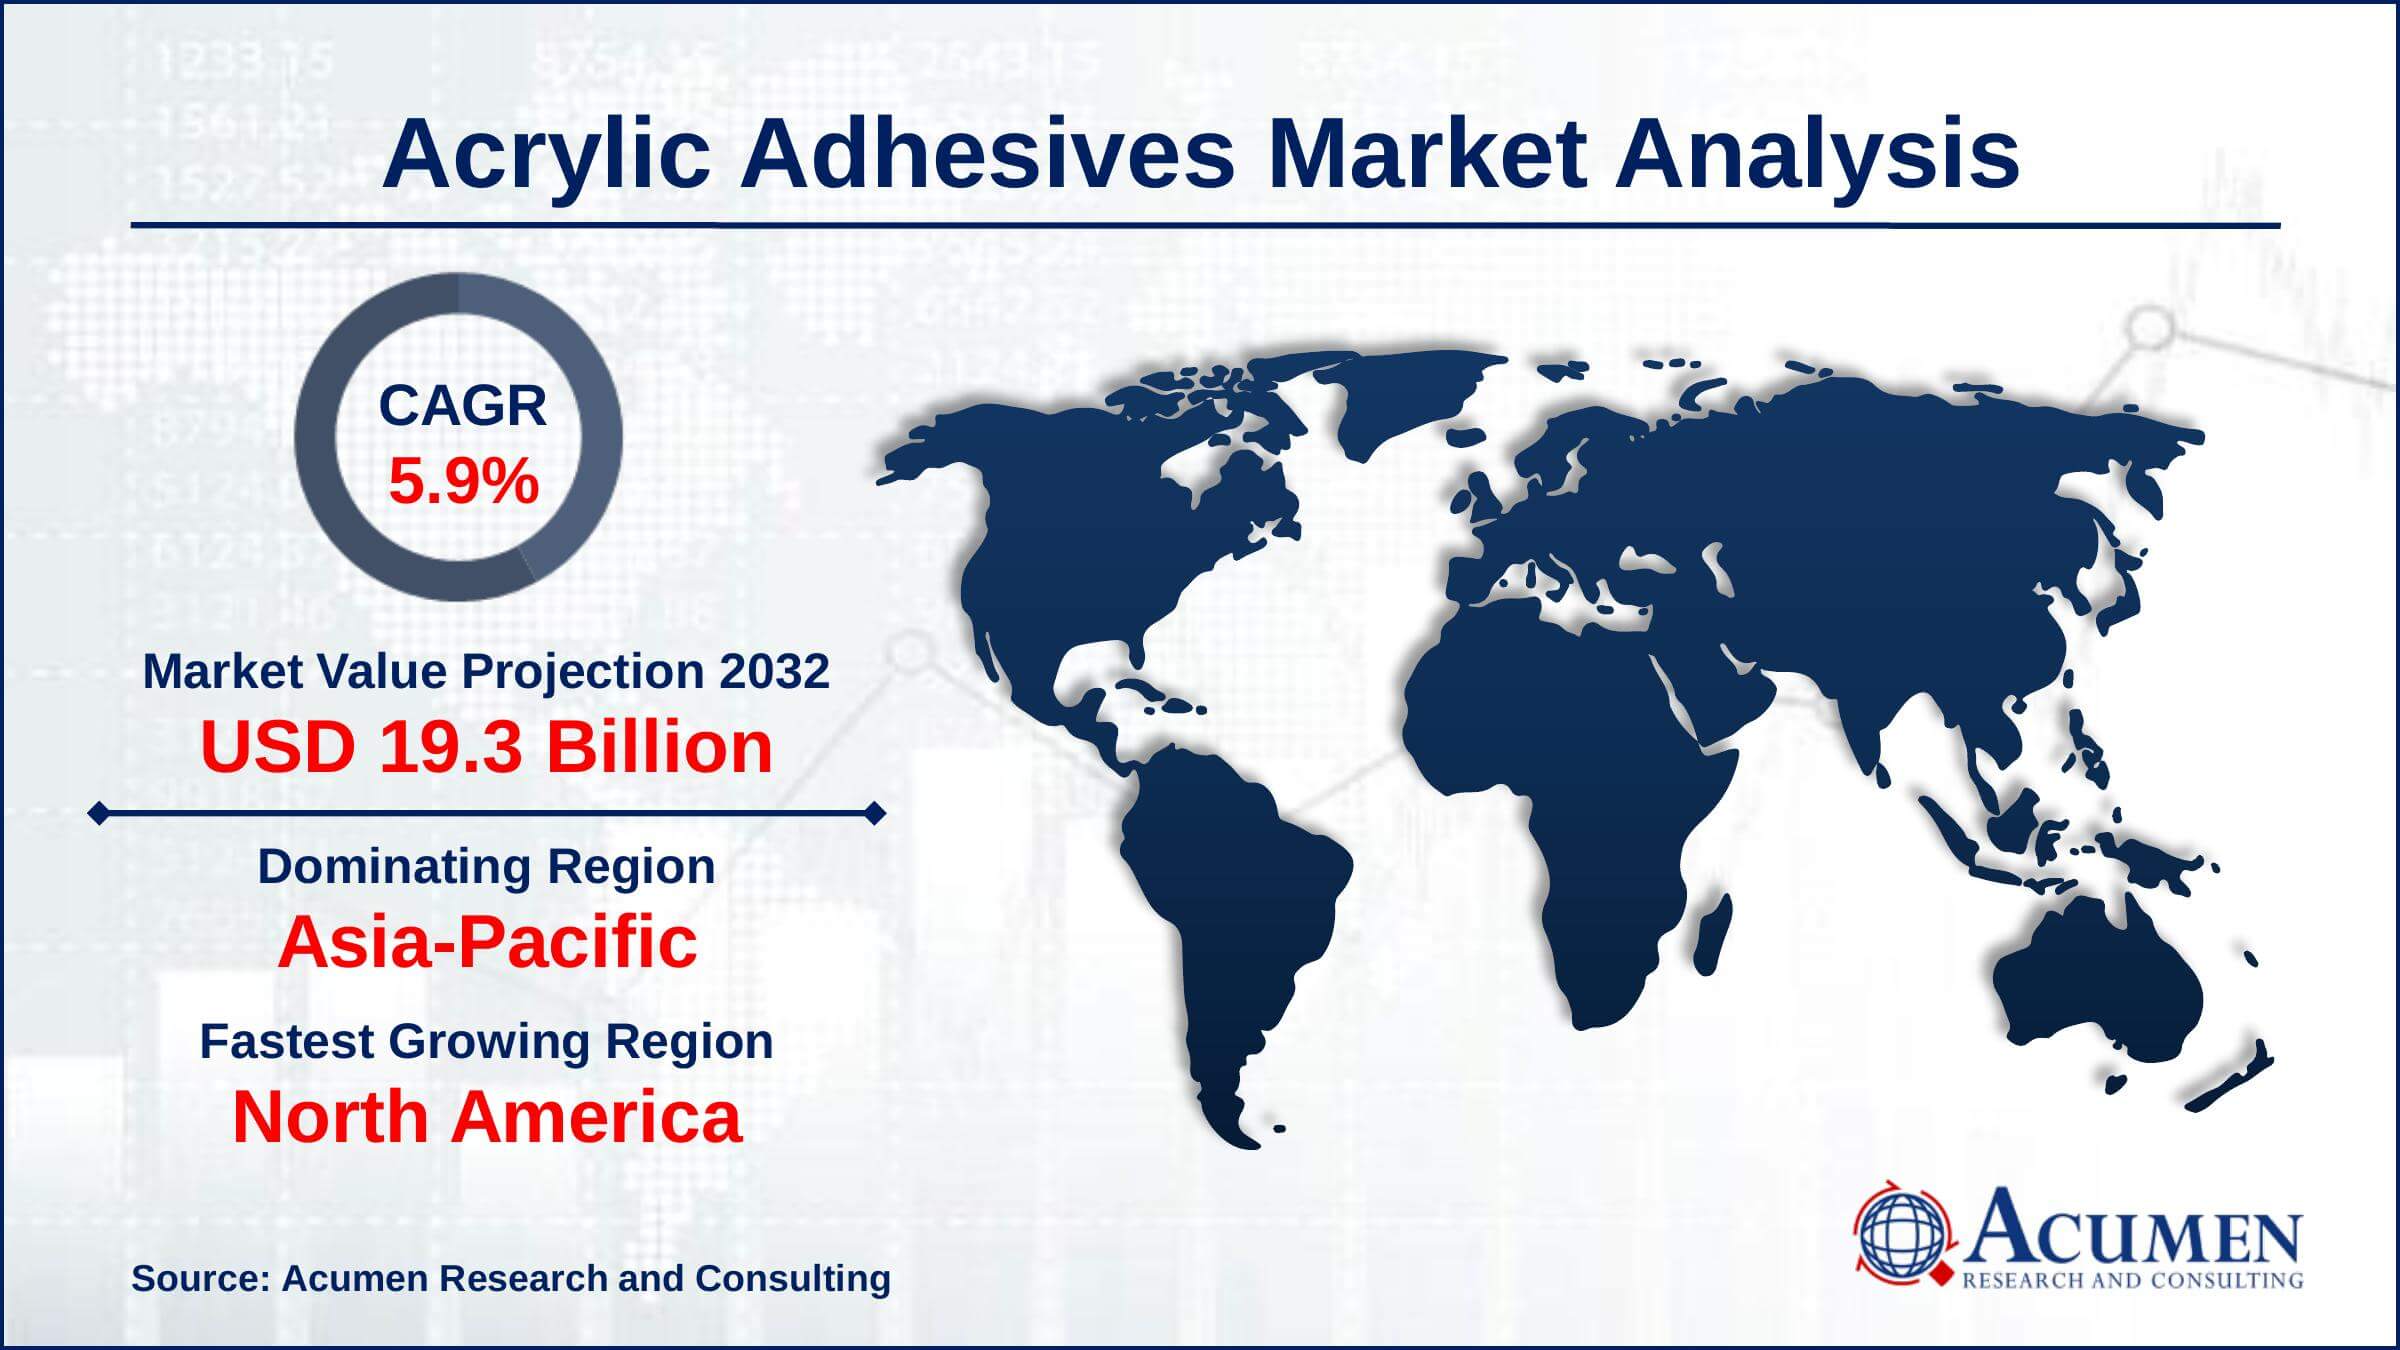 Global Acrylic Adhesives Market Trends